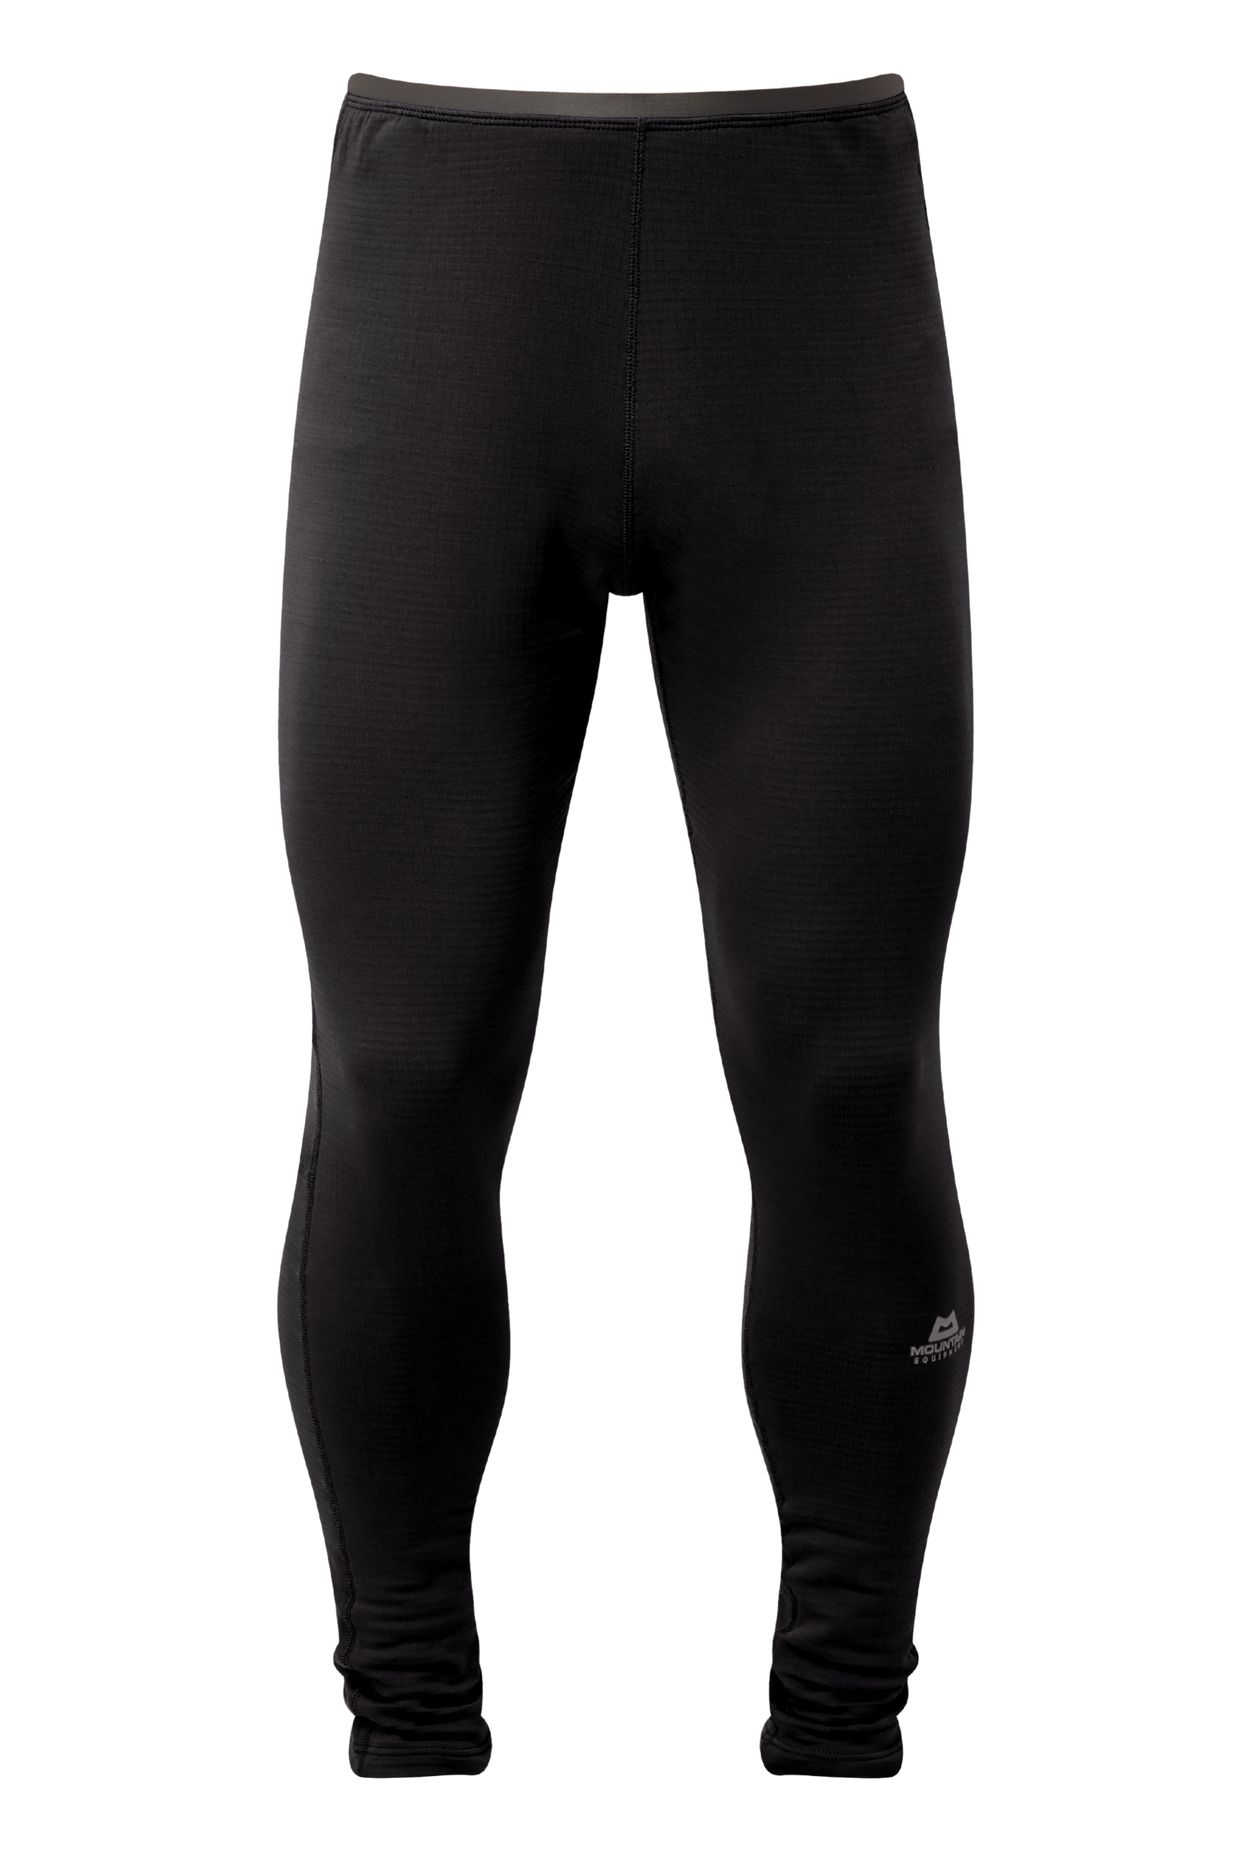 Mountain Equipment pánské fleece kalhoty Eclipse Pant Barva: black, Velikost: L